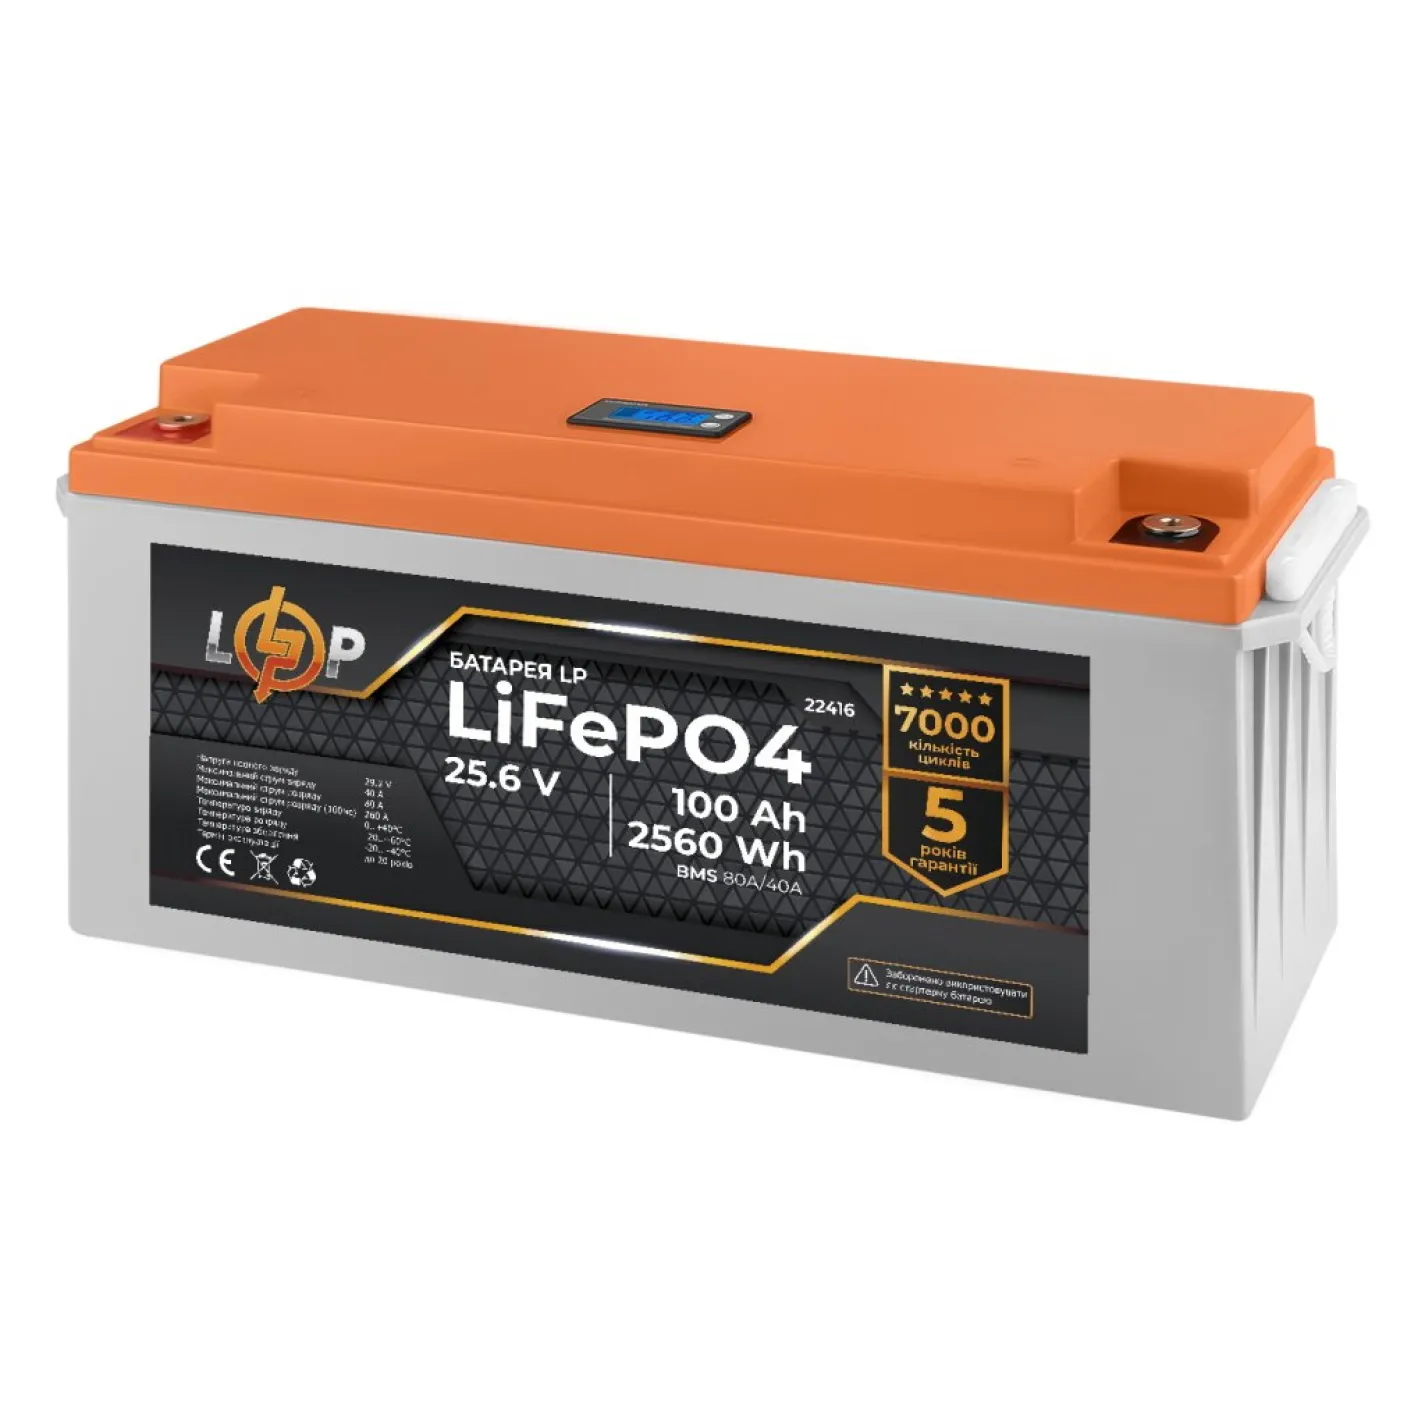 Аккумулятор для ИБП LogicPower LP LiFePO4 24V - 100 Ah (2560Wh) (BMS 80/40А) LCD - Фото 1